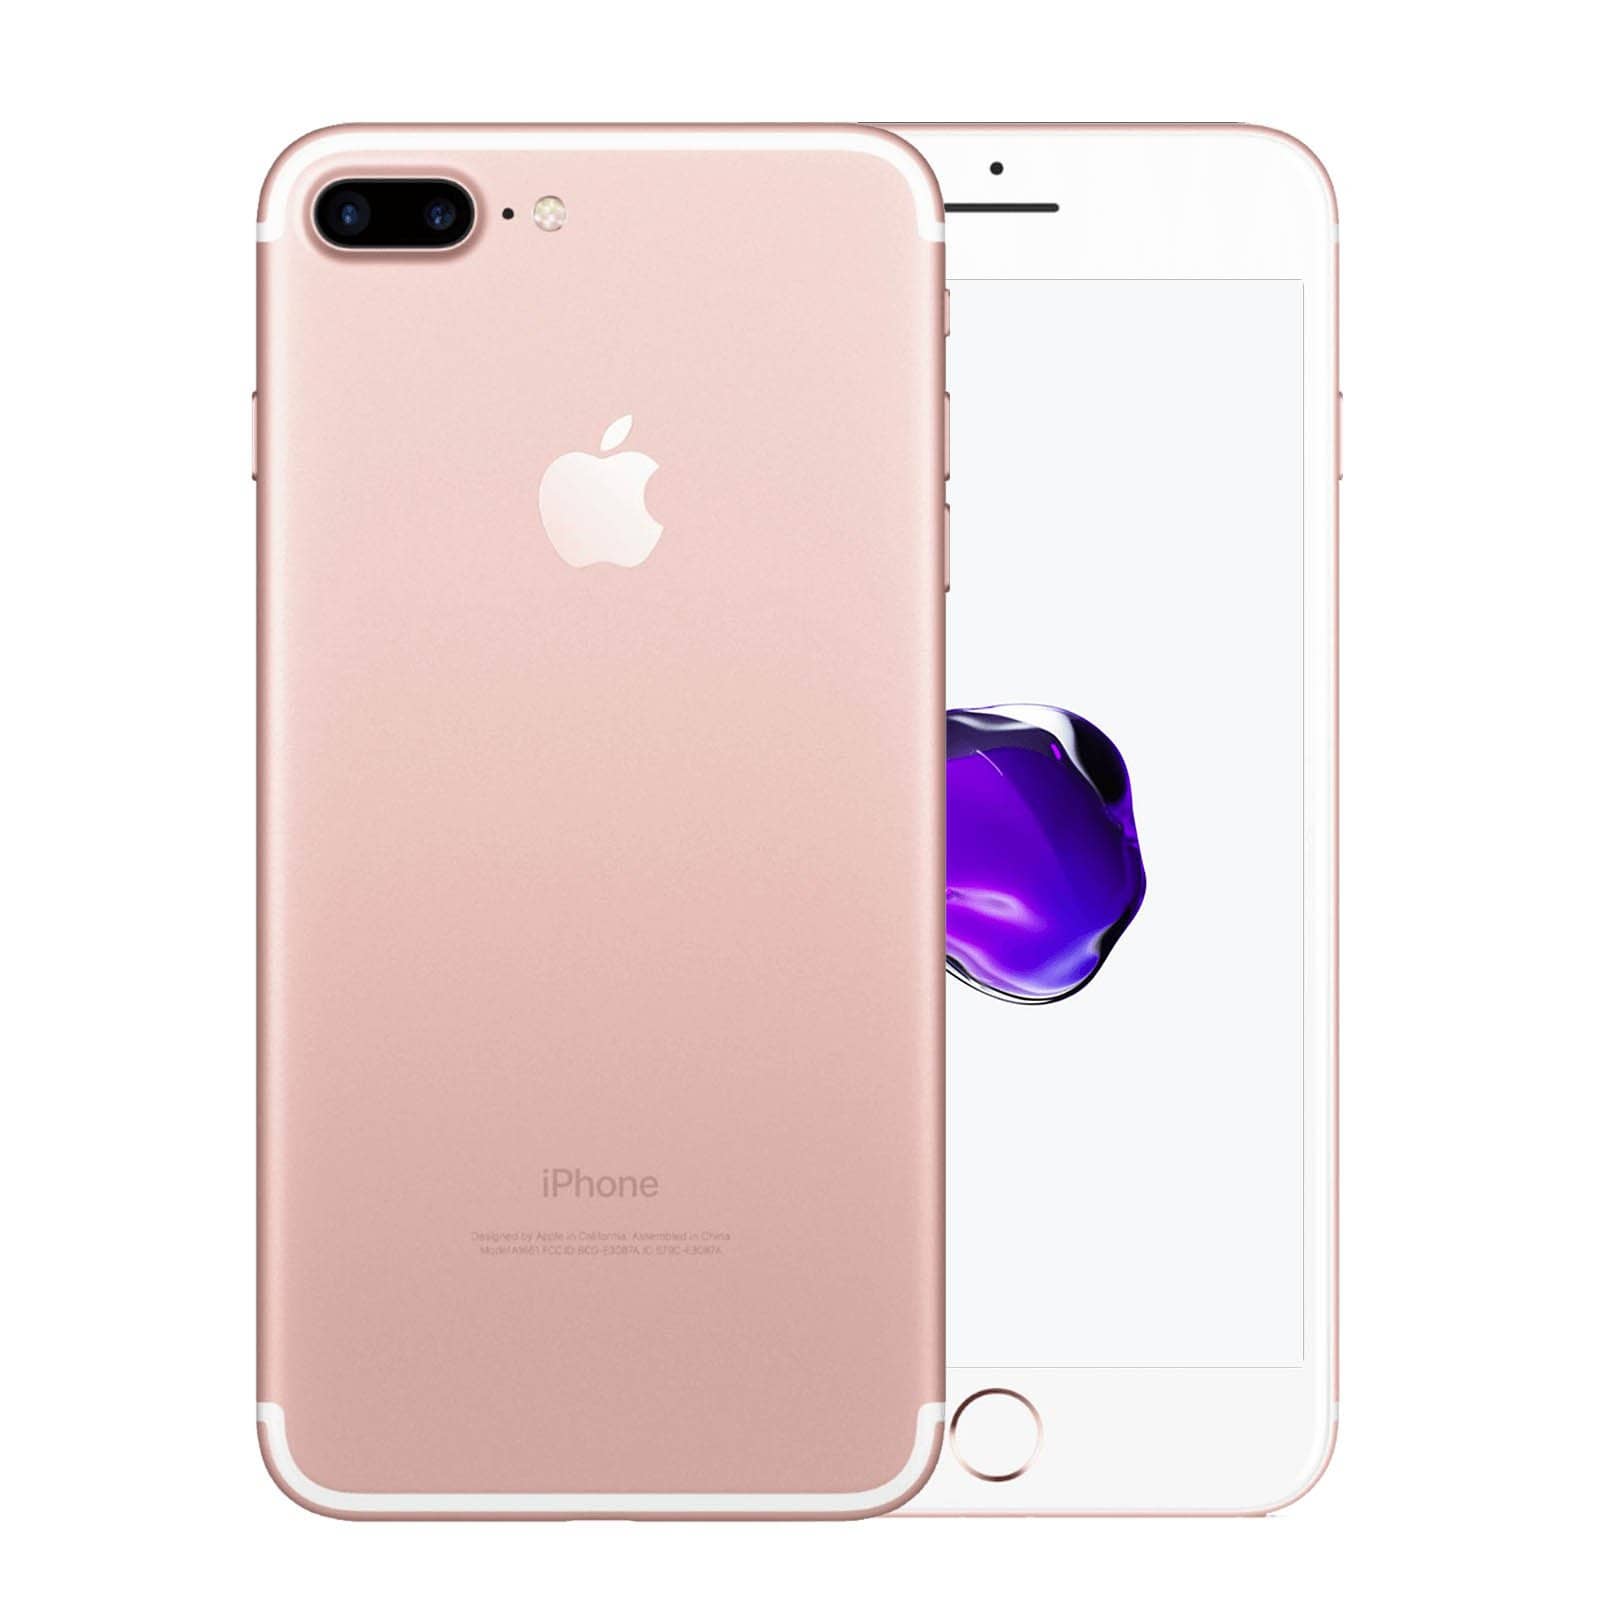 Apple iPhone 7 Plus 128GB Rose Gold Very Good - Unlocked 128GB Rose Gold Very Good